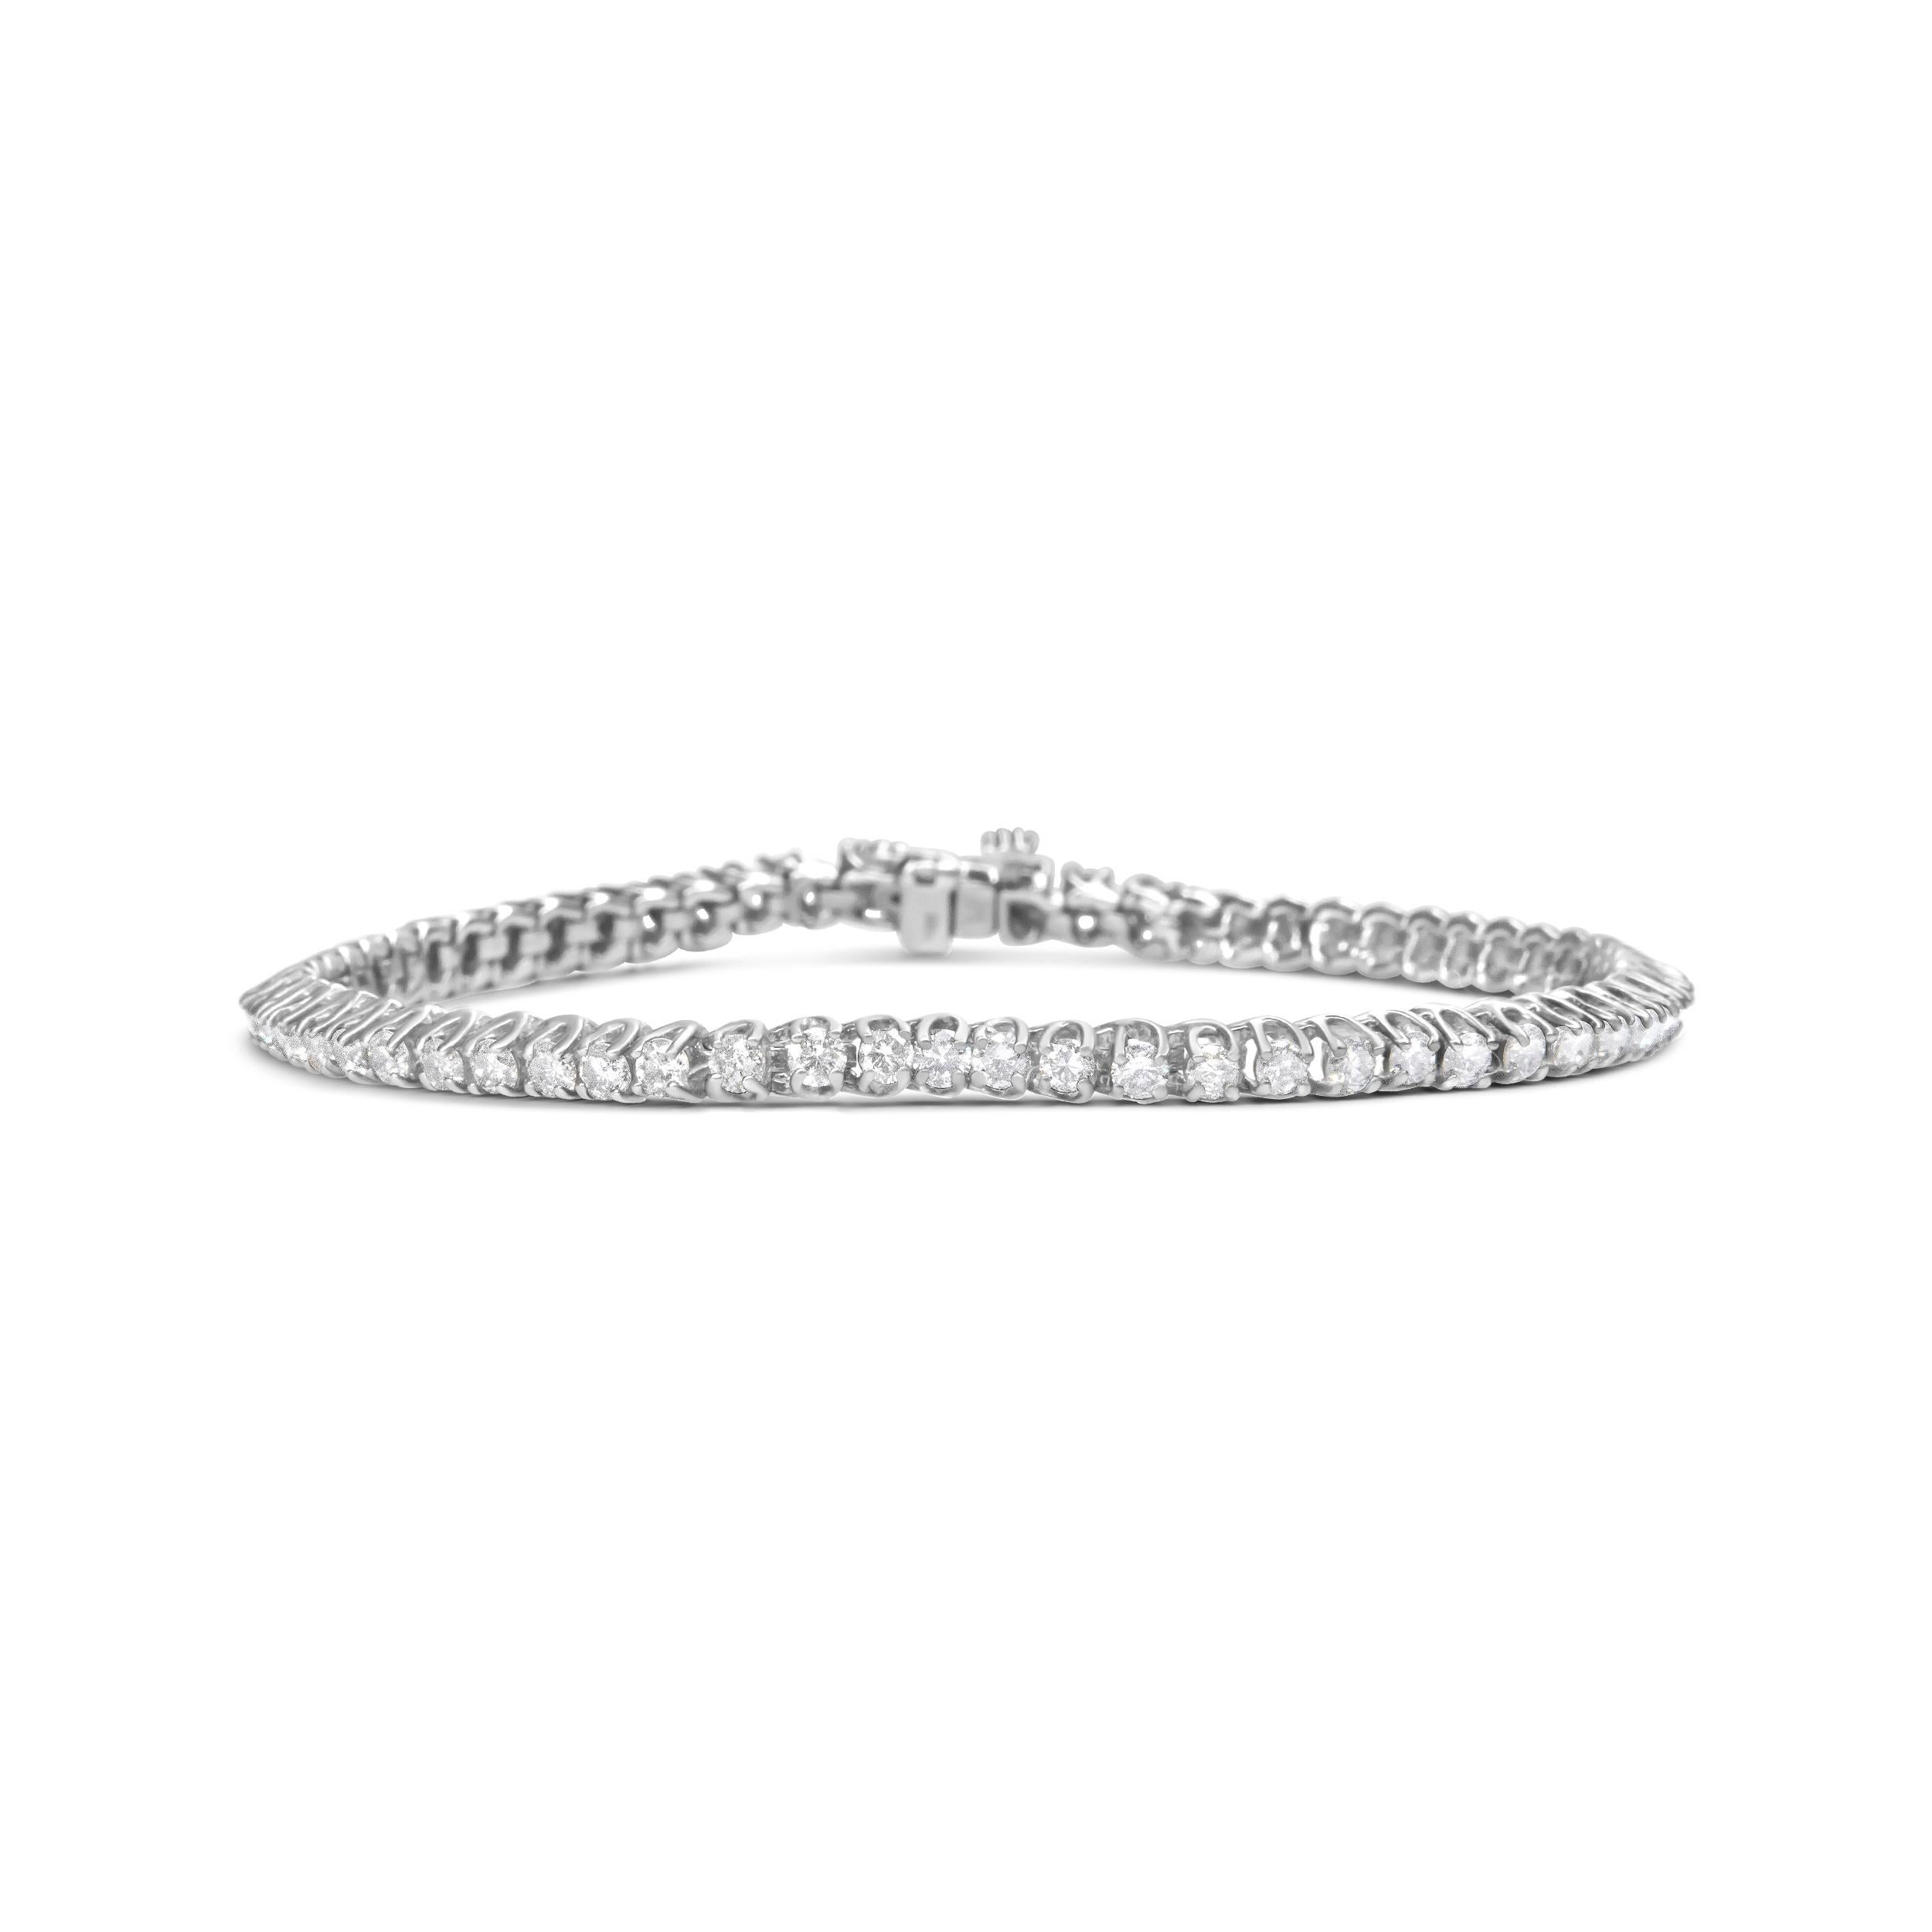 sterling silver tennis bracelet